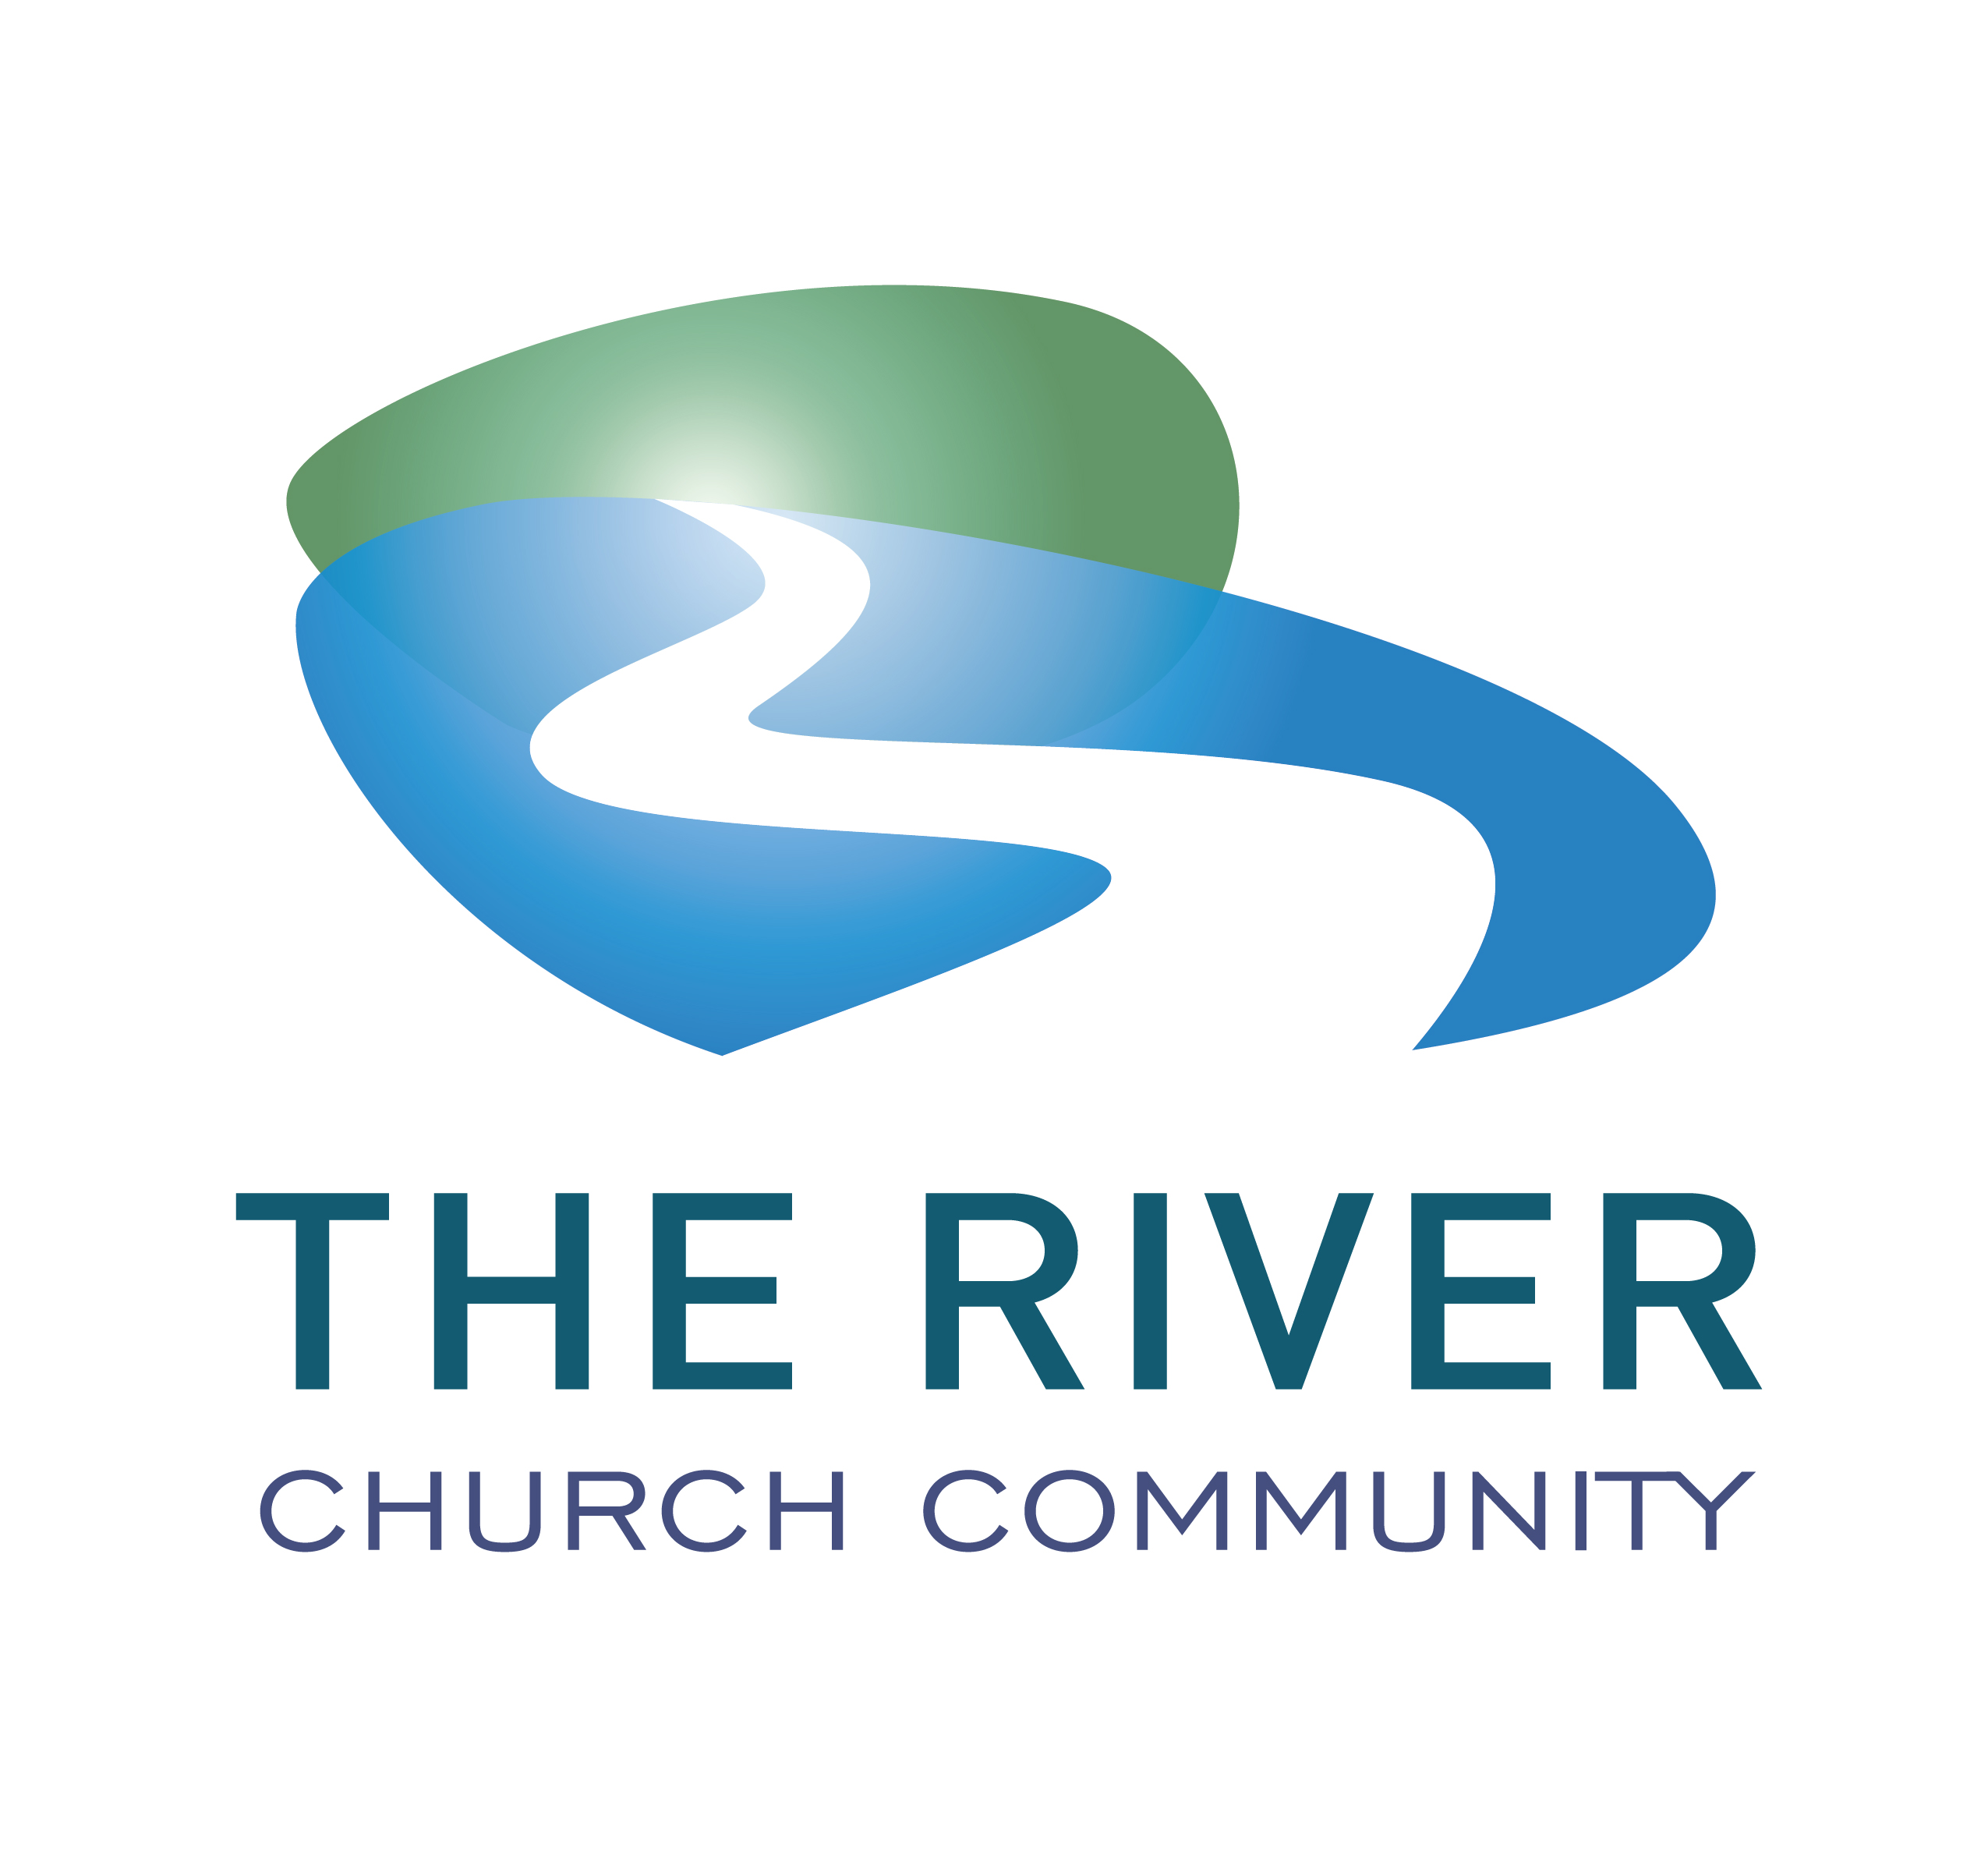 The River Church Community